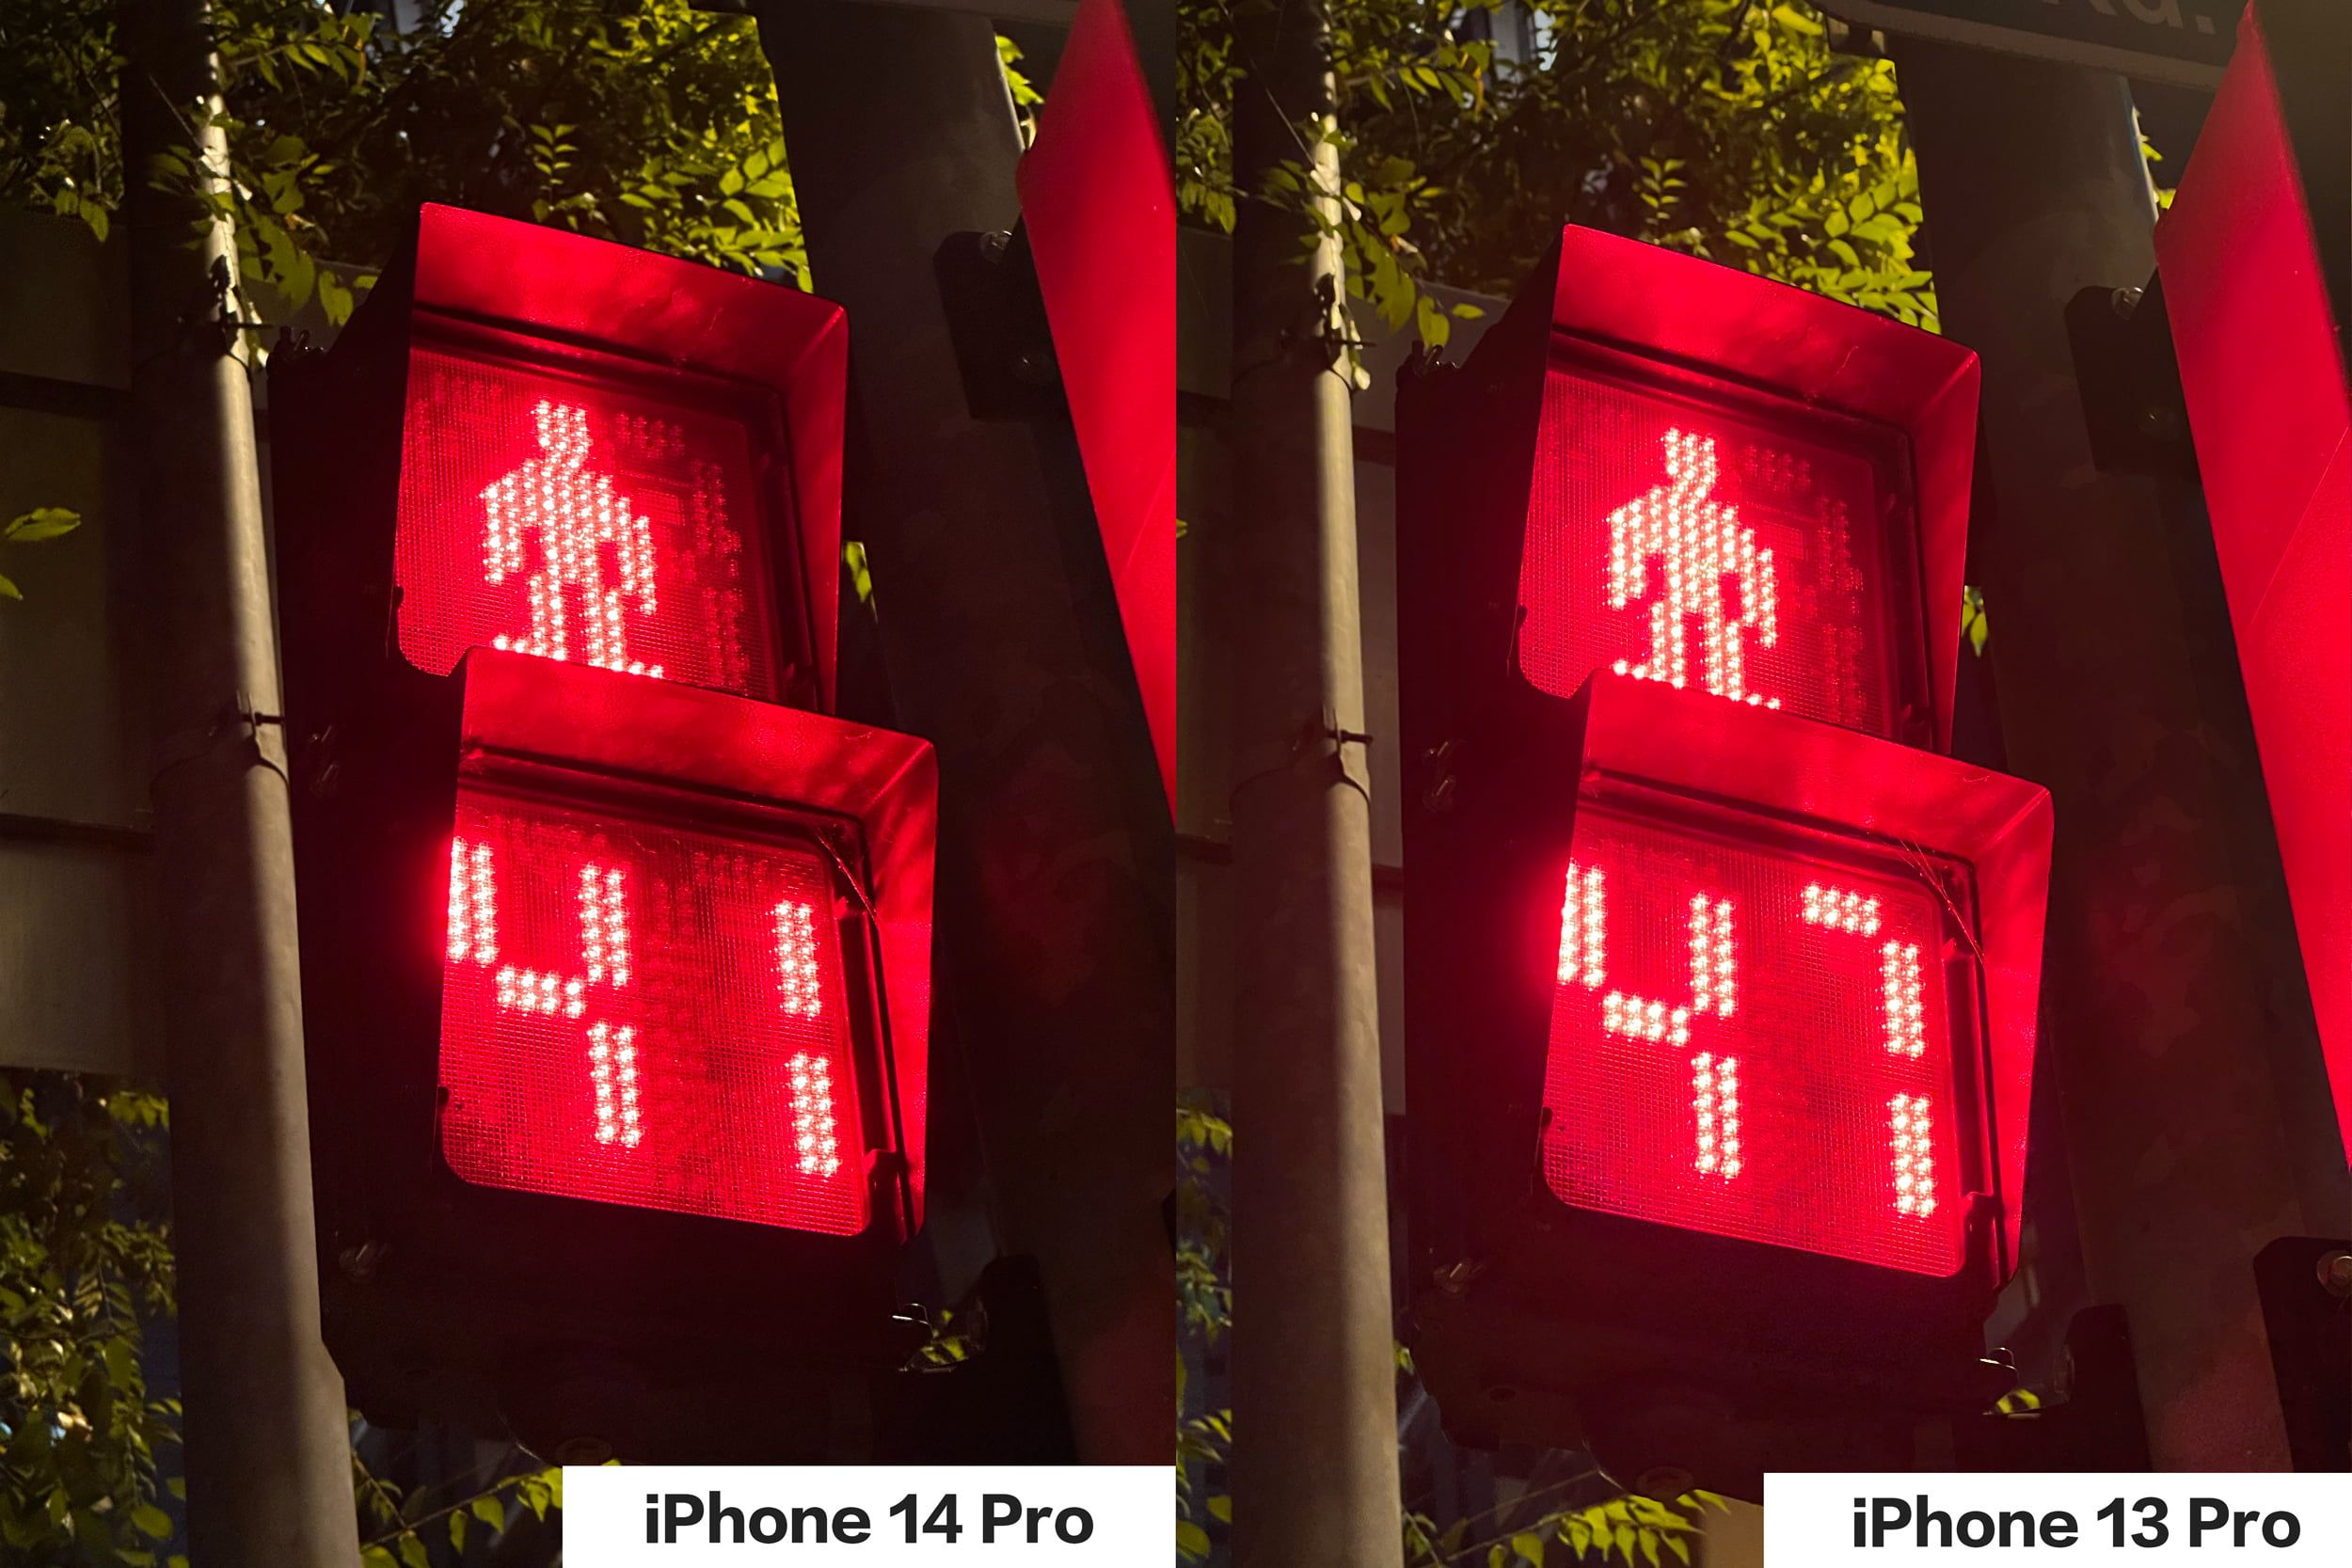 iPhone 14 Pro night shot comparison test